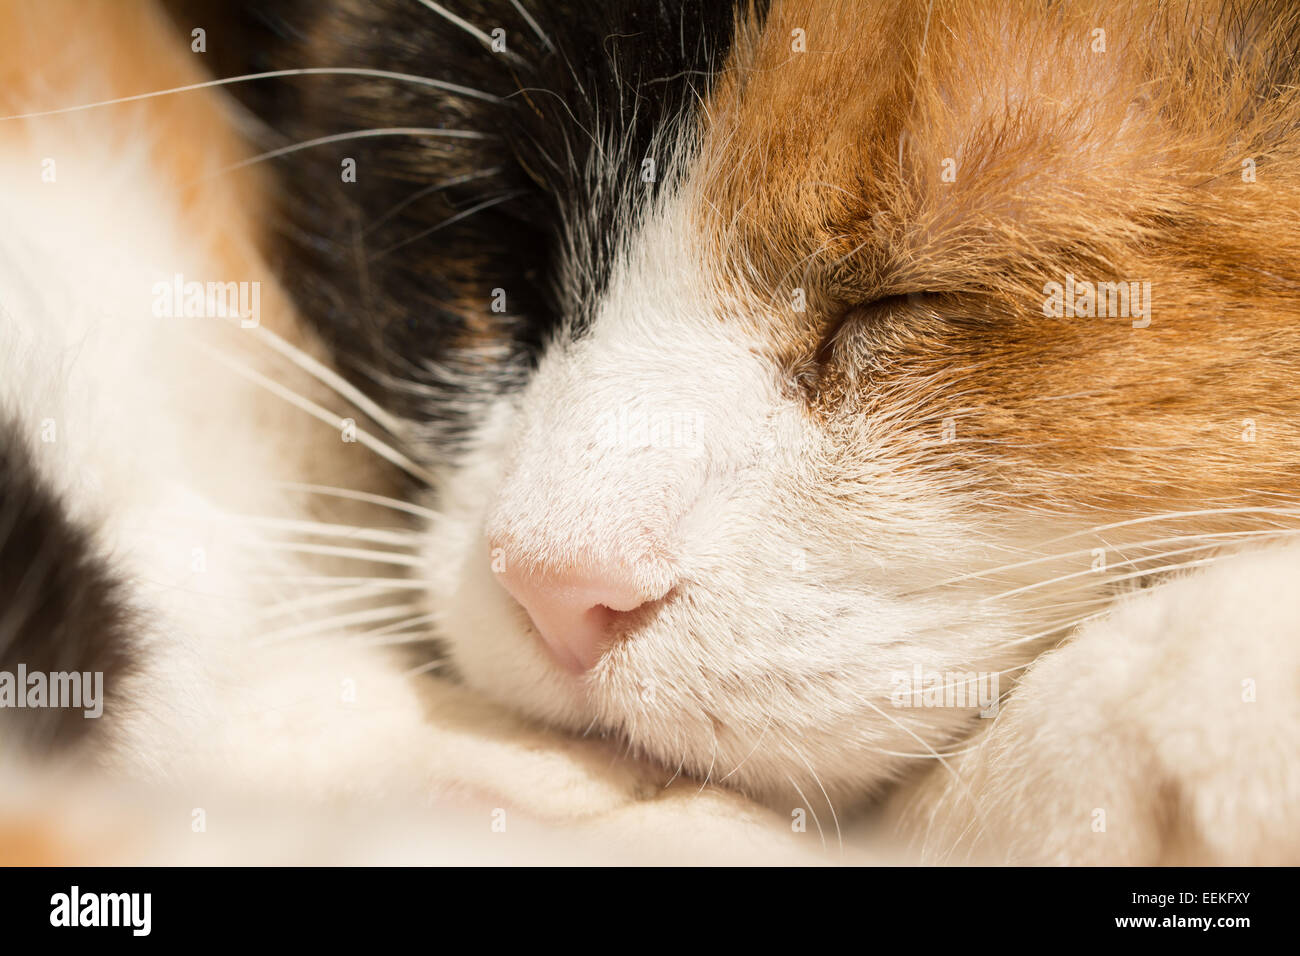 Closeup of a sleeping calico cat Stock Photo